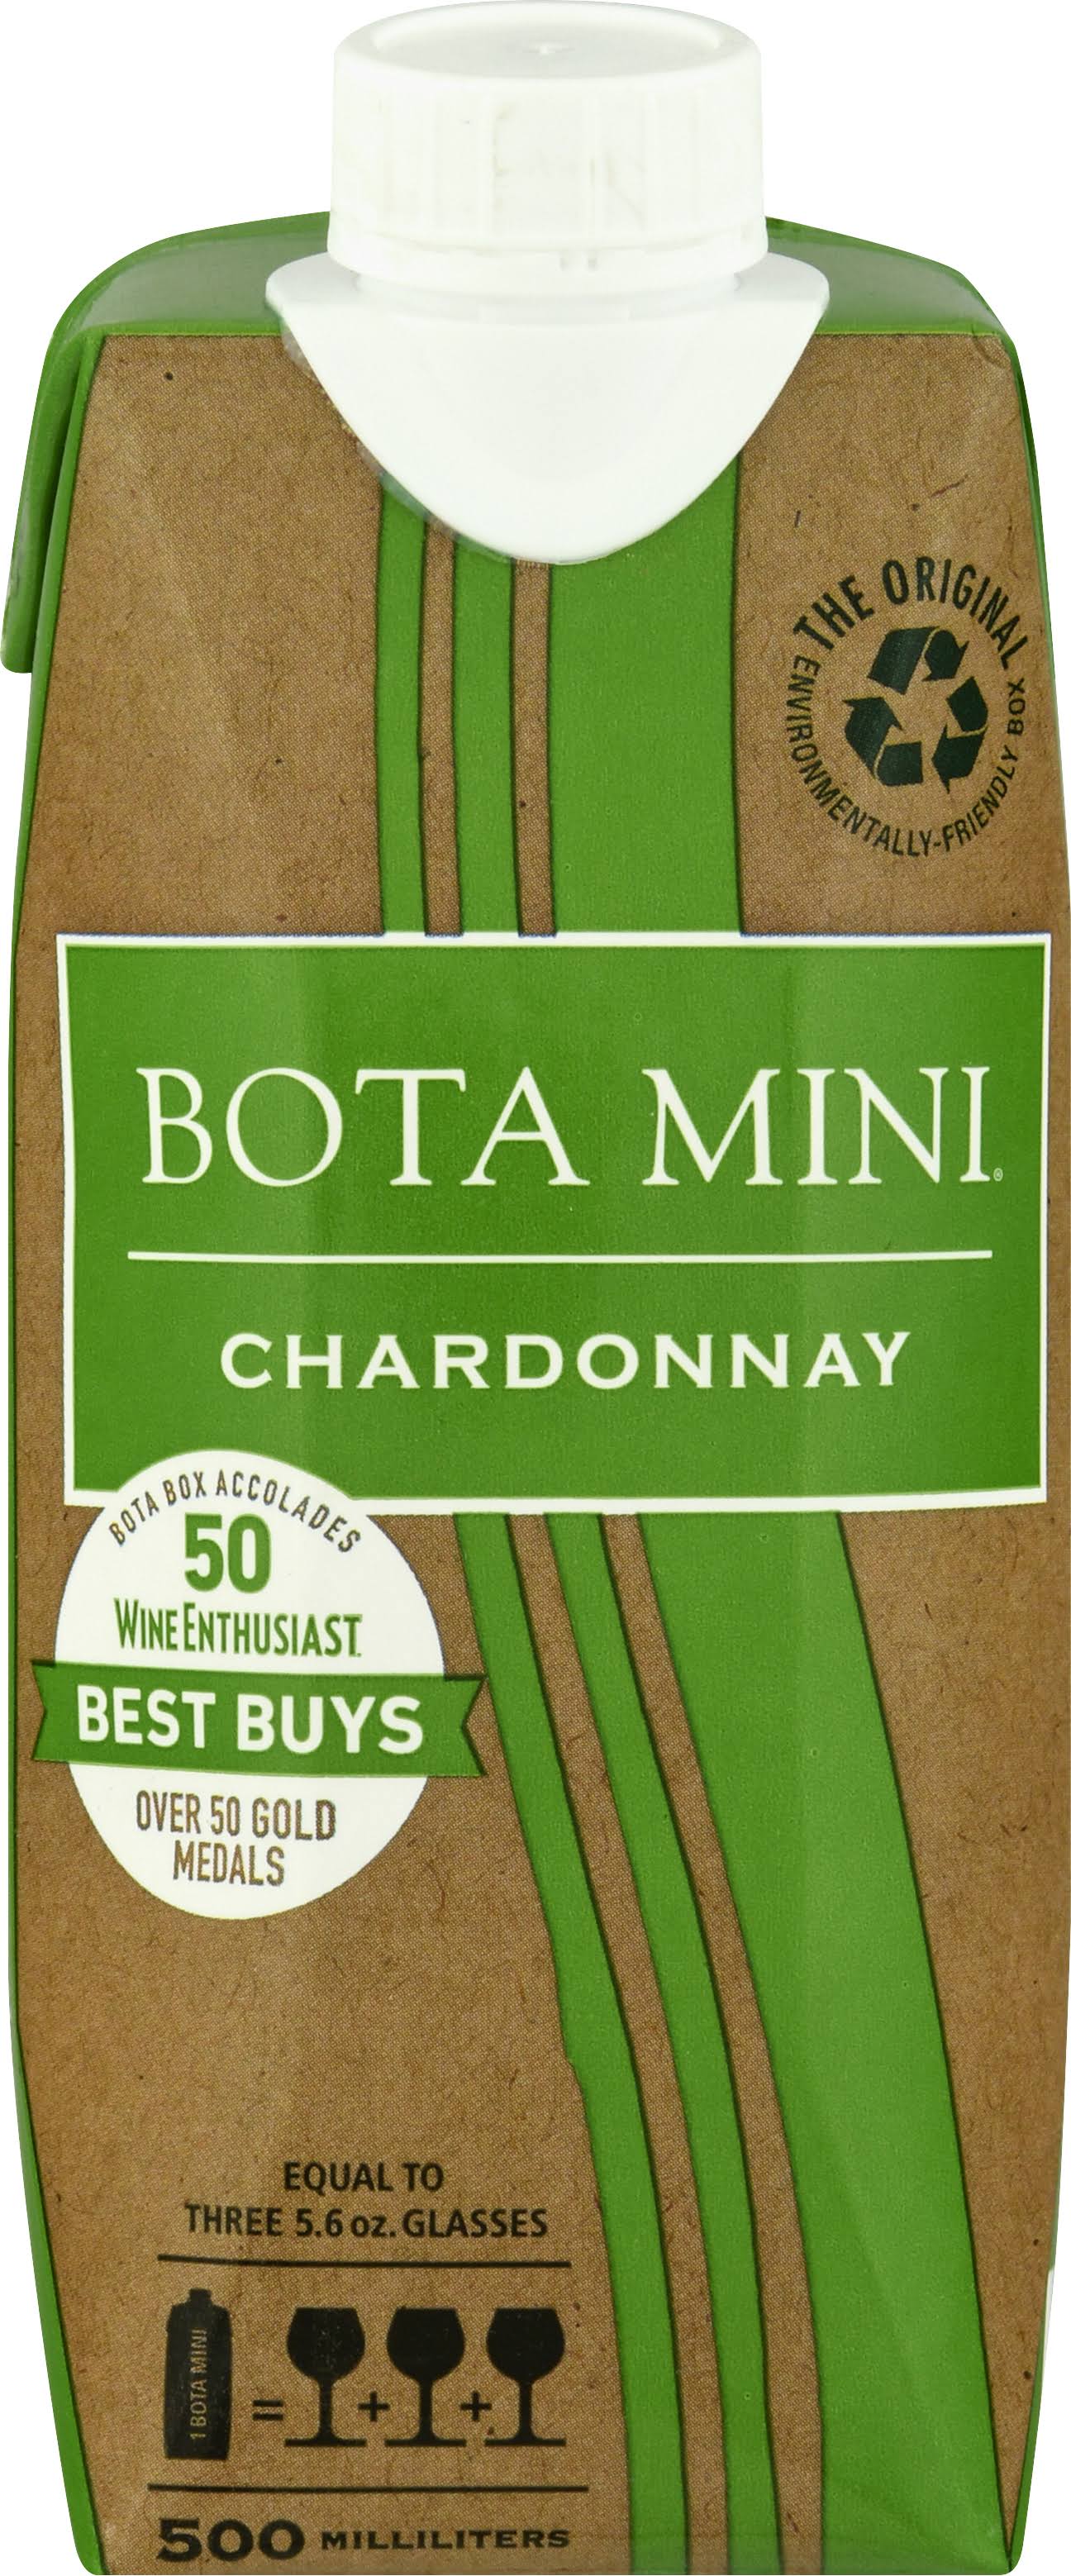 Bota Mini Chardonnay - 500 milliliters